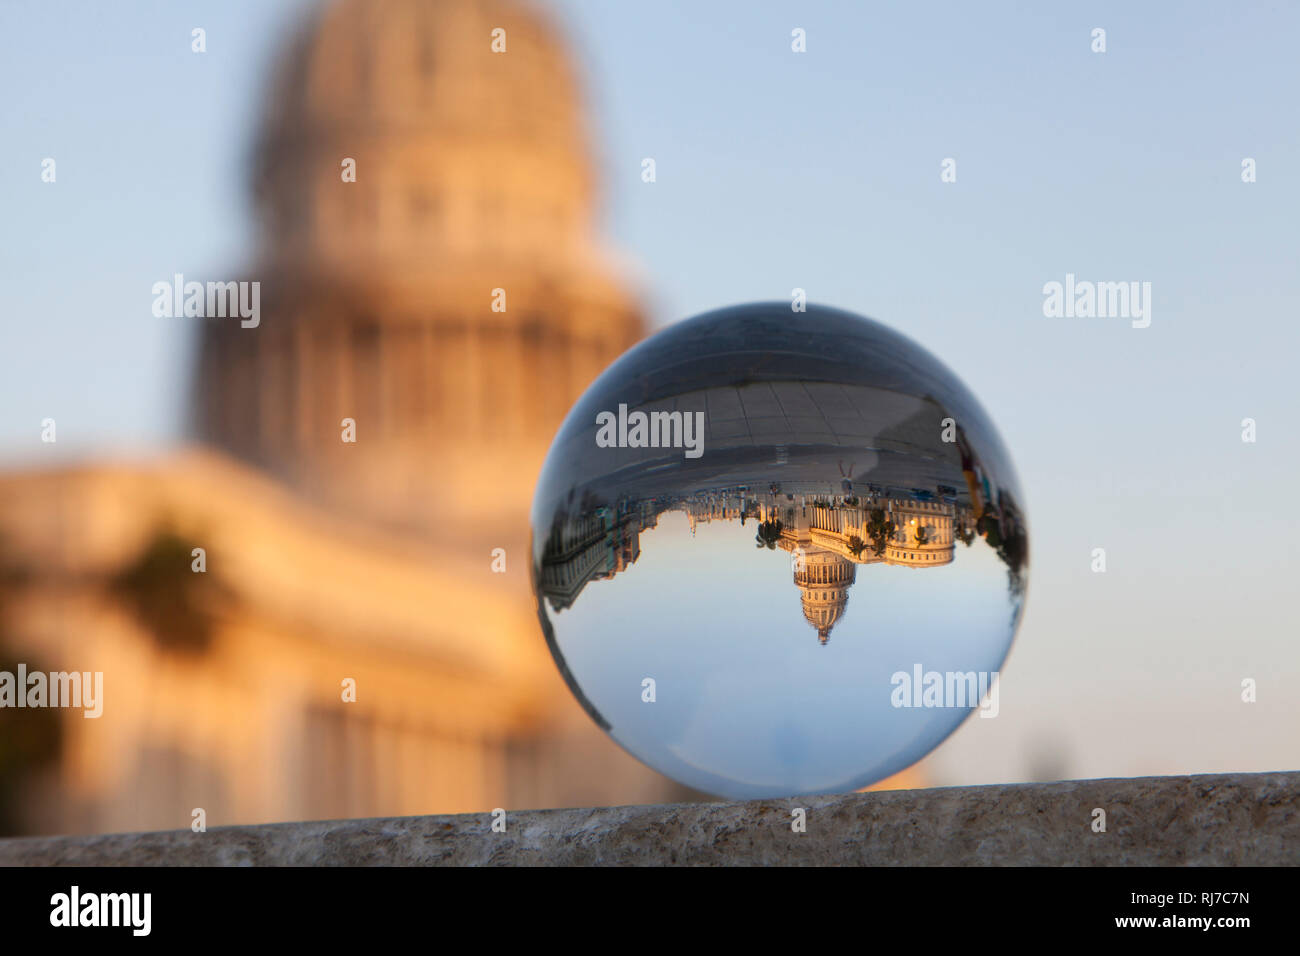 Karibik, Kuba, Cuba Havanna, La Habana, Capitol spiegelt sich in Glaskugel Foto Stock